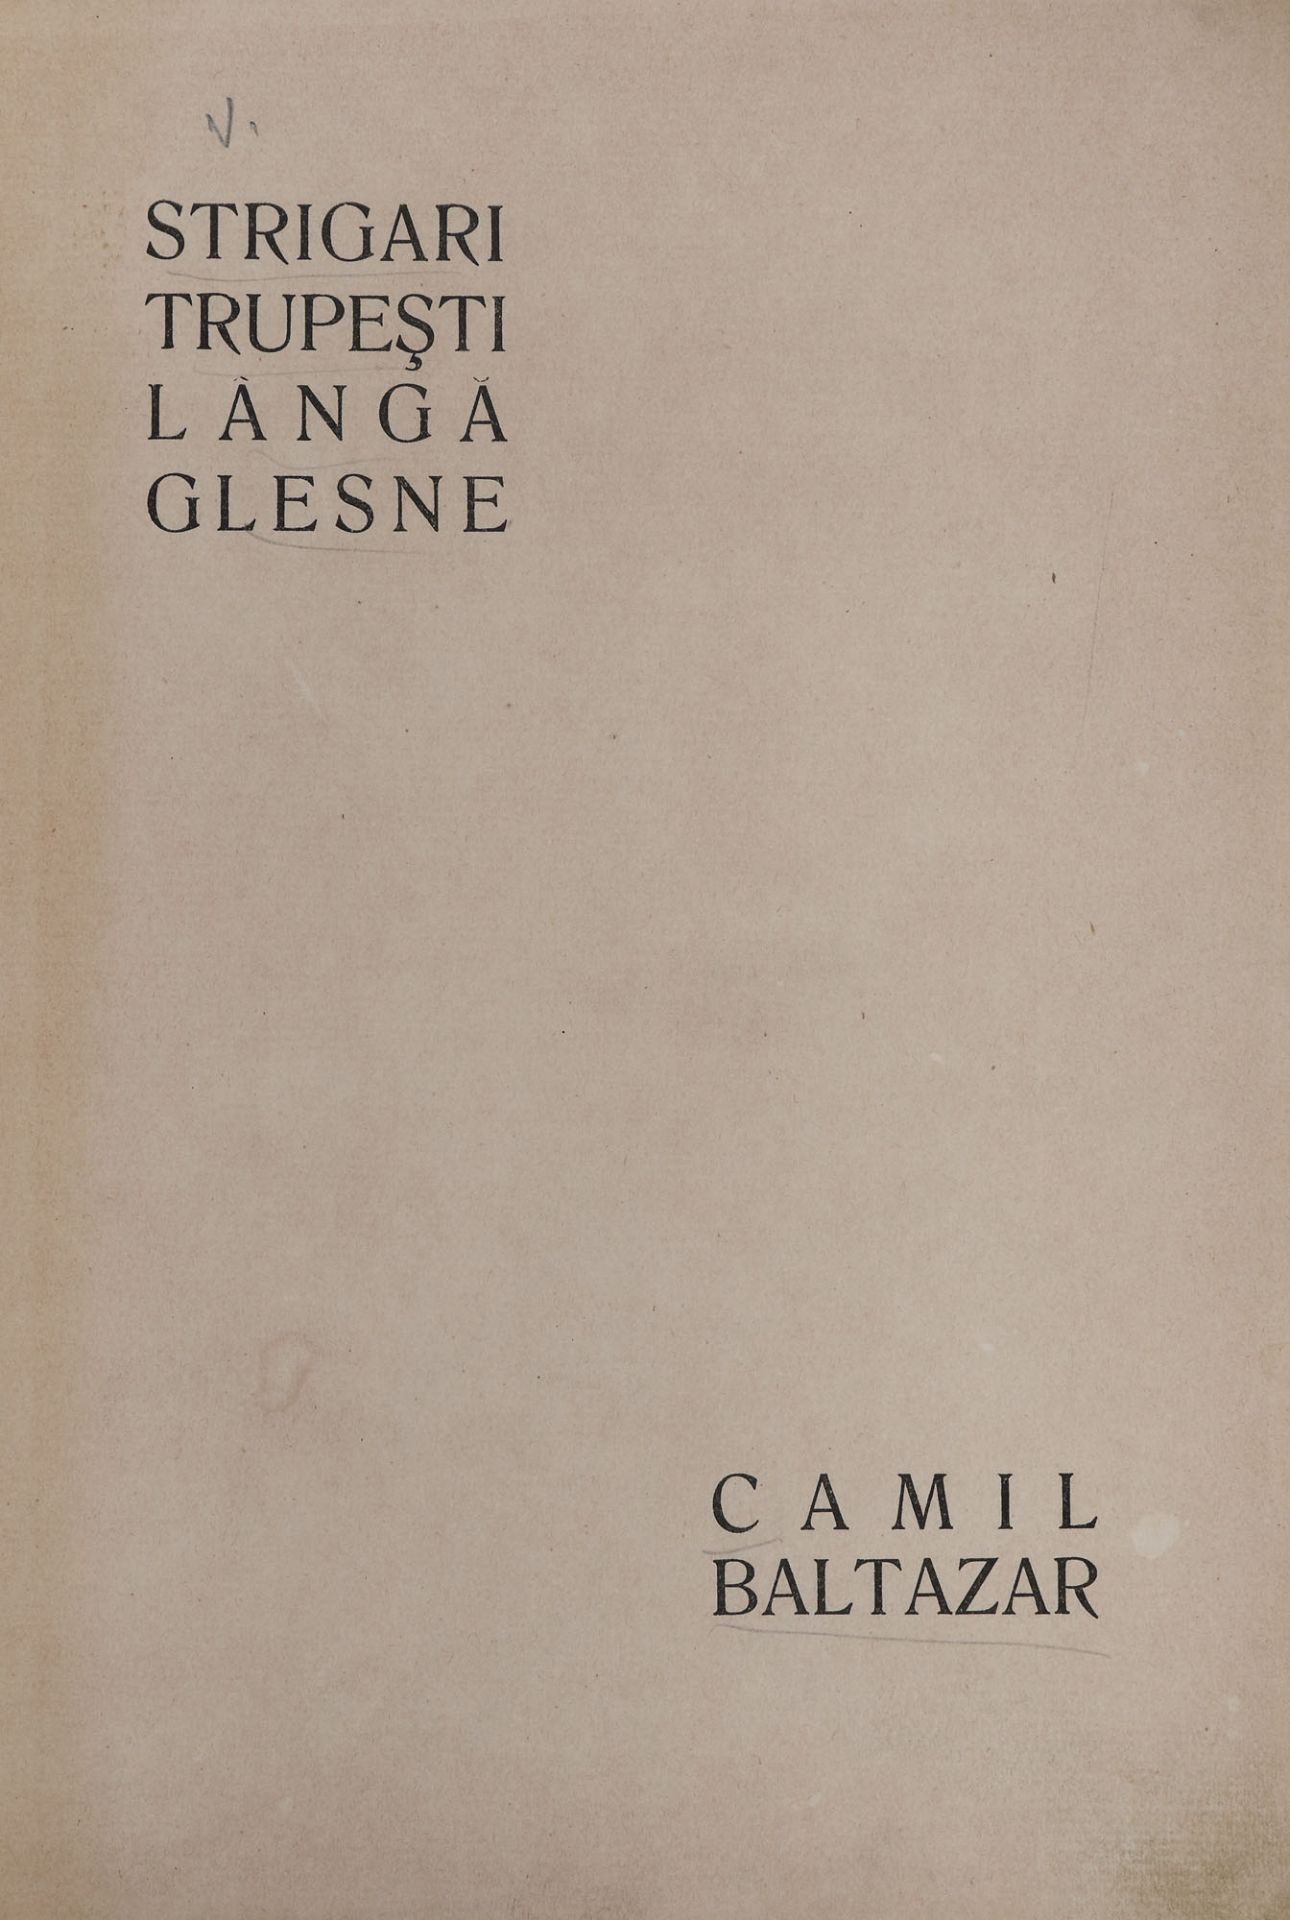 "Strig?ri trupe?ti lâng? glezne", by Camil Baltazar, with illustrations by Mac Constantinescu, Bucha